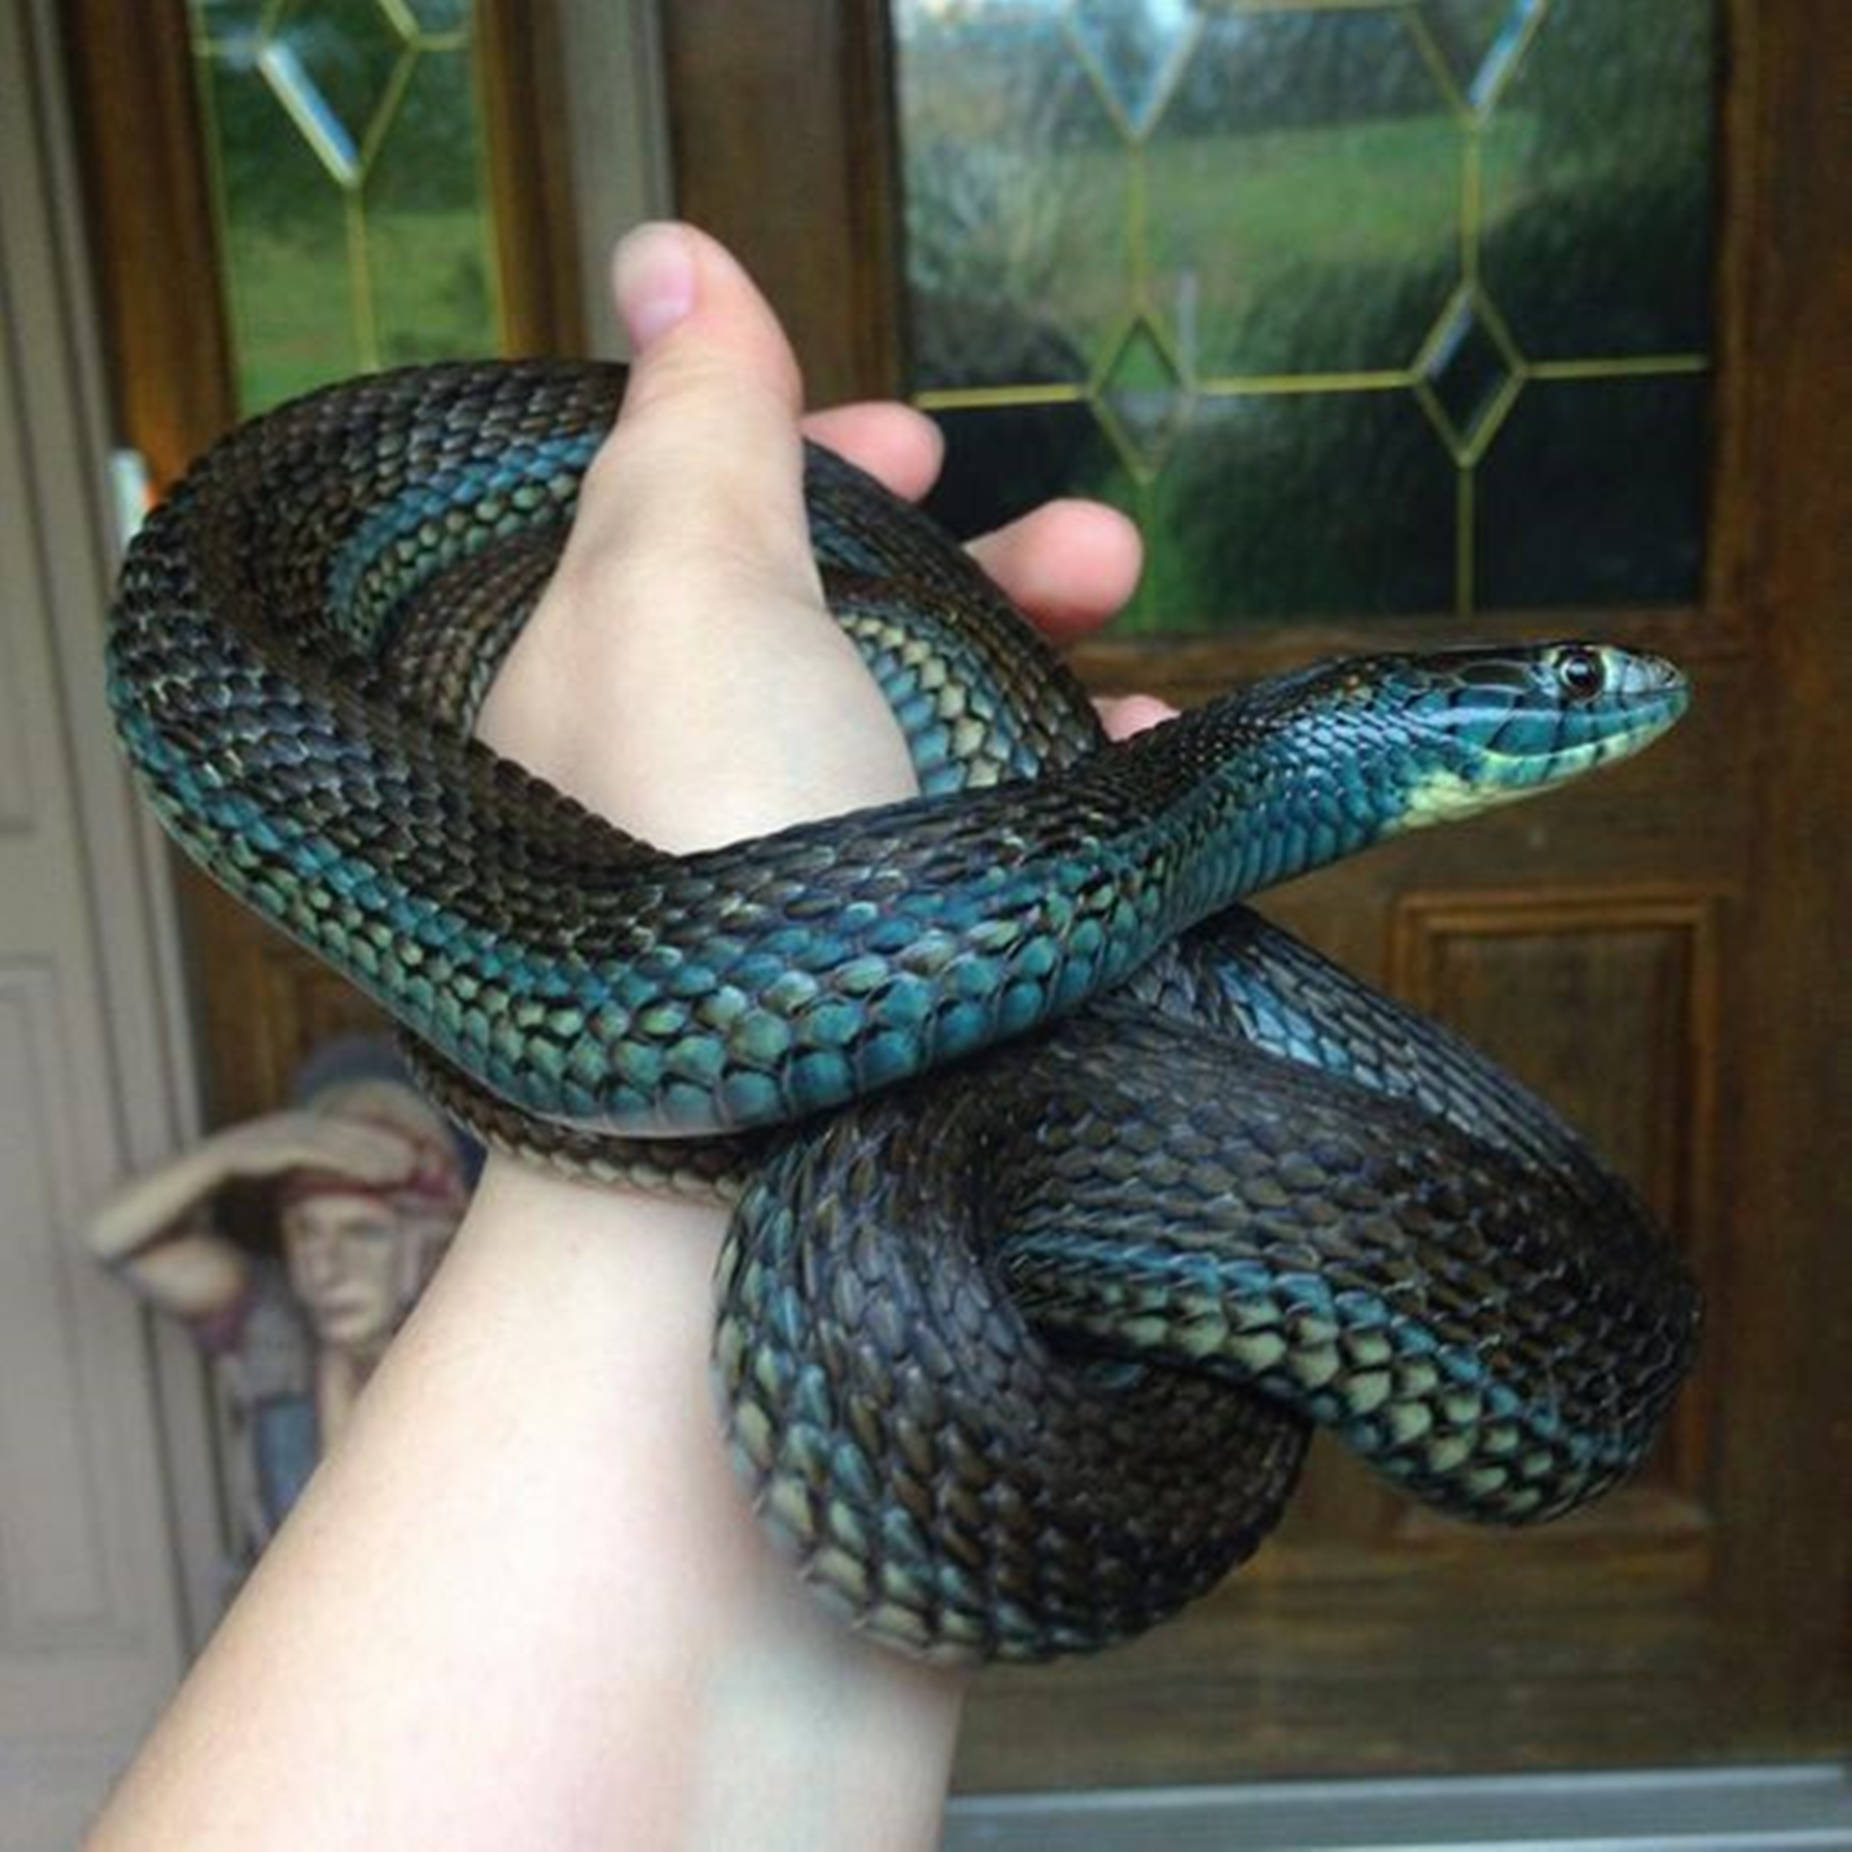 Rafael The Lake Chapala Mexican Garter Snake Wallpaper